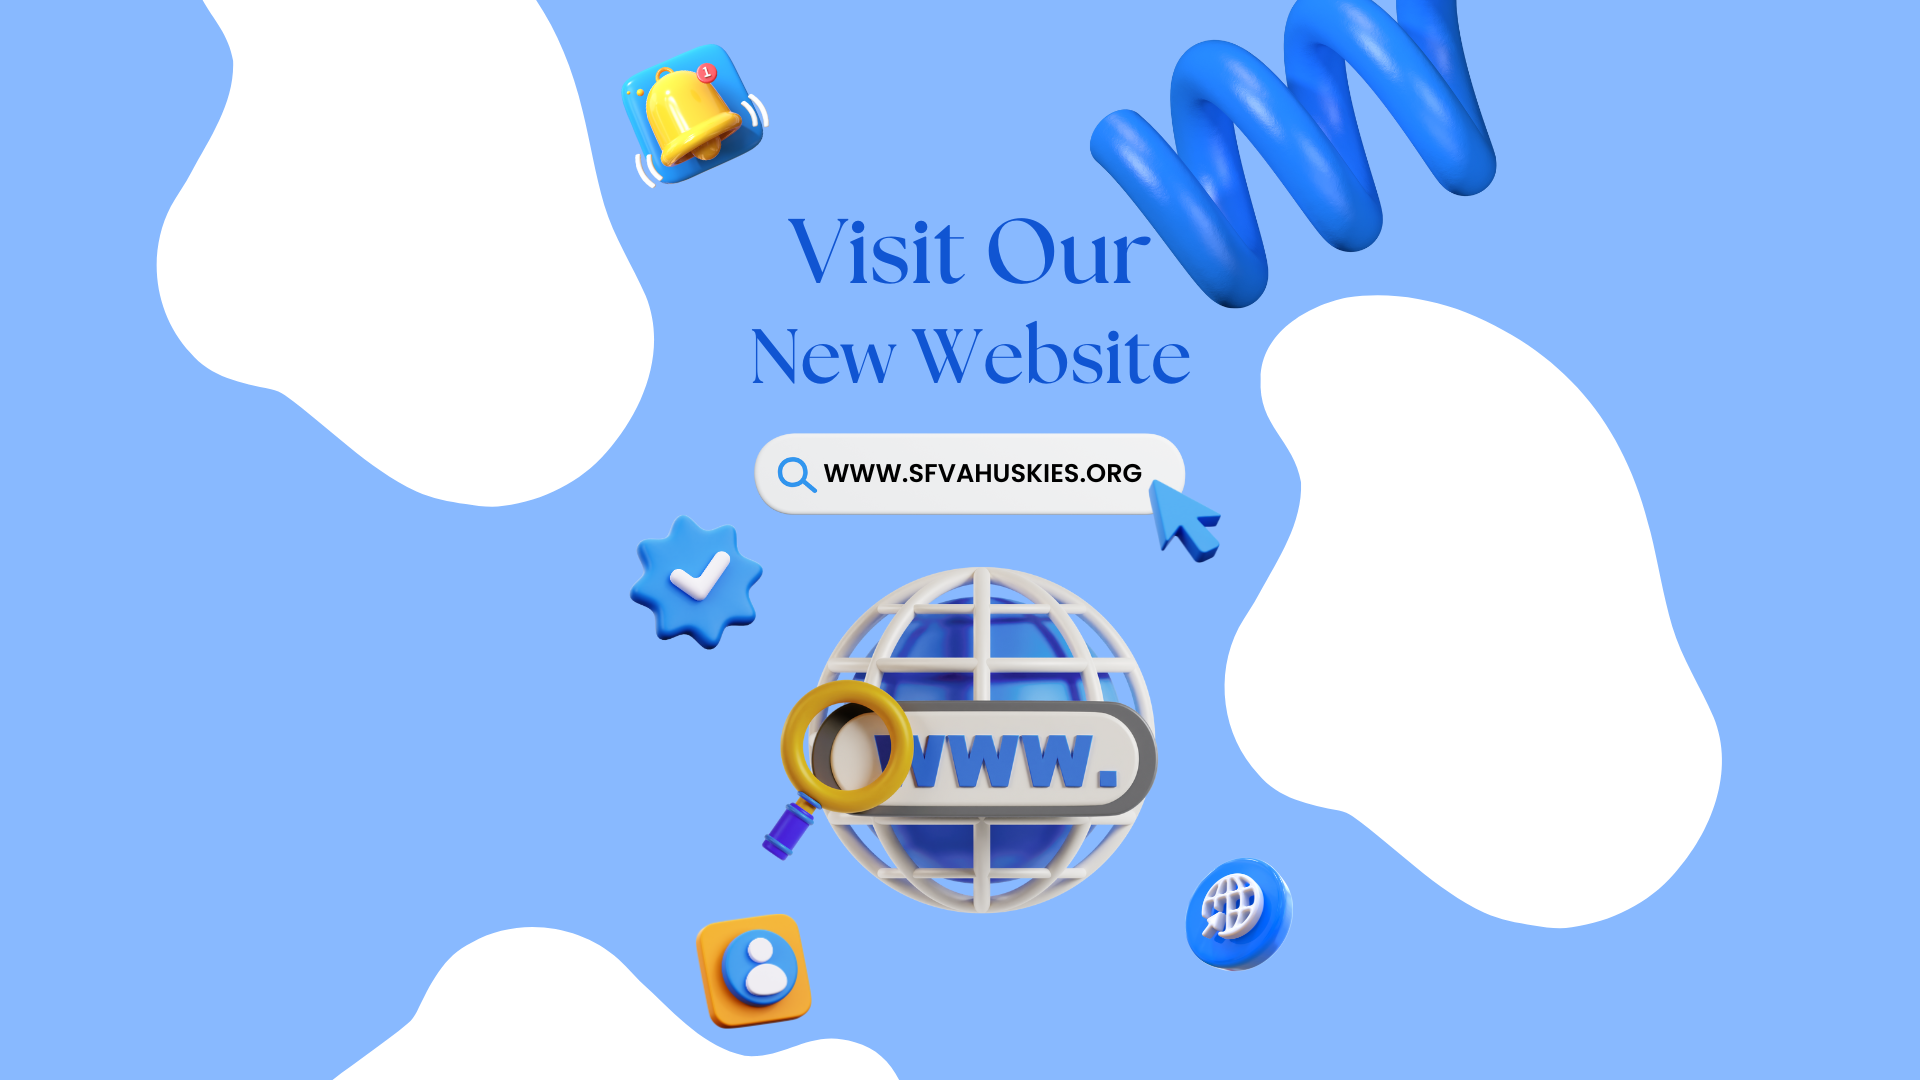 Blue and White Minimalist Visit Our New Website A4 Document (Desktop Wallpaper)